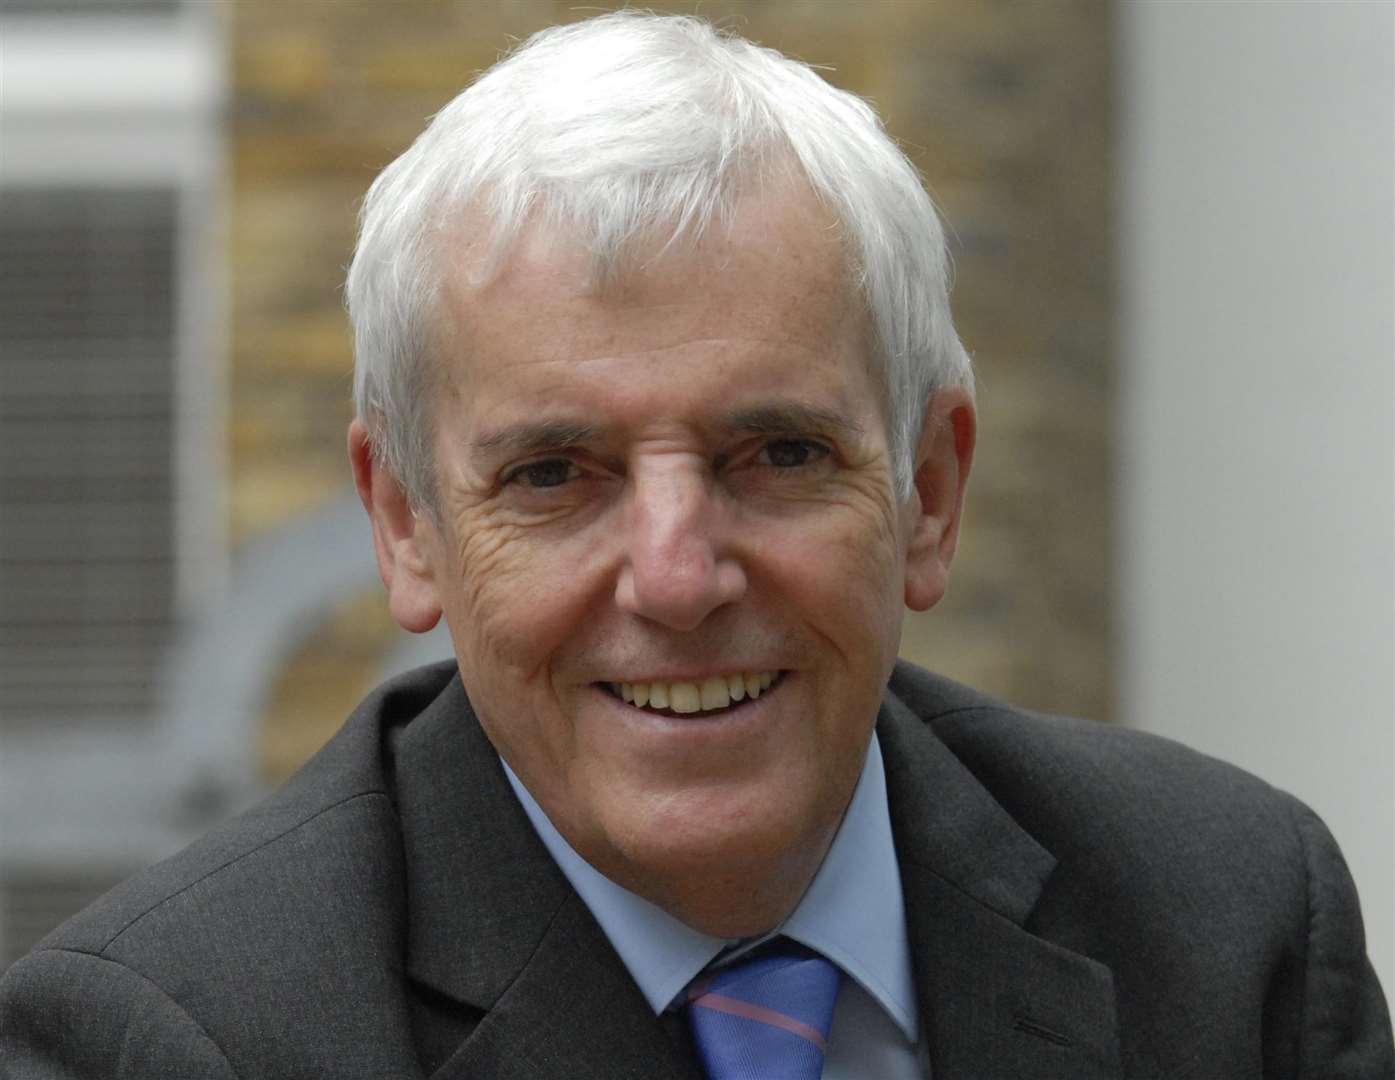 The former interim chairman of East Kent Hospitals Peter Carter